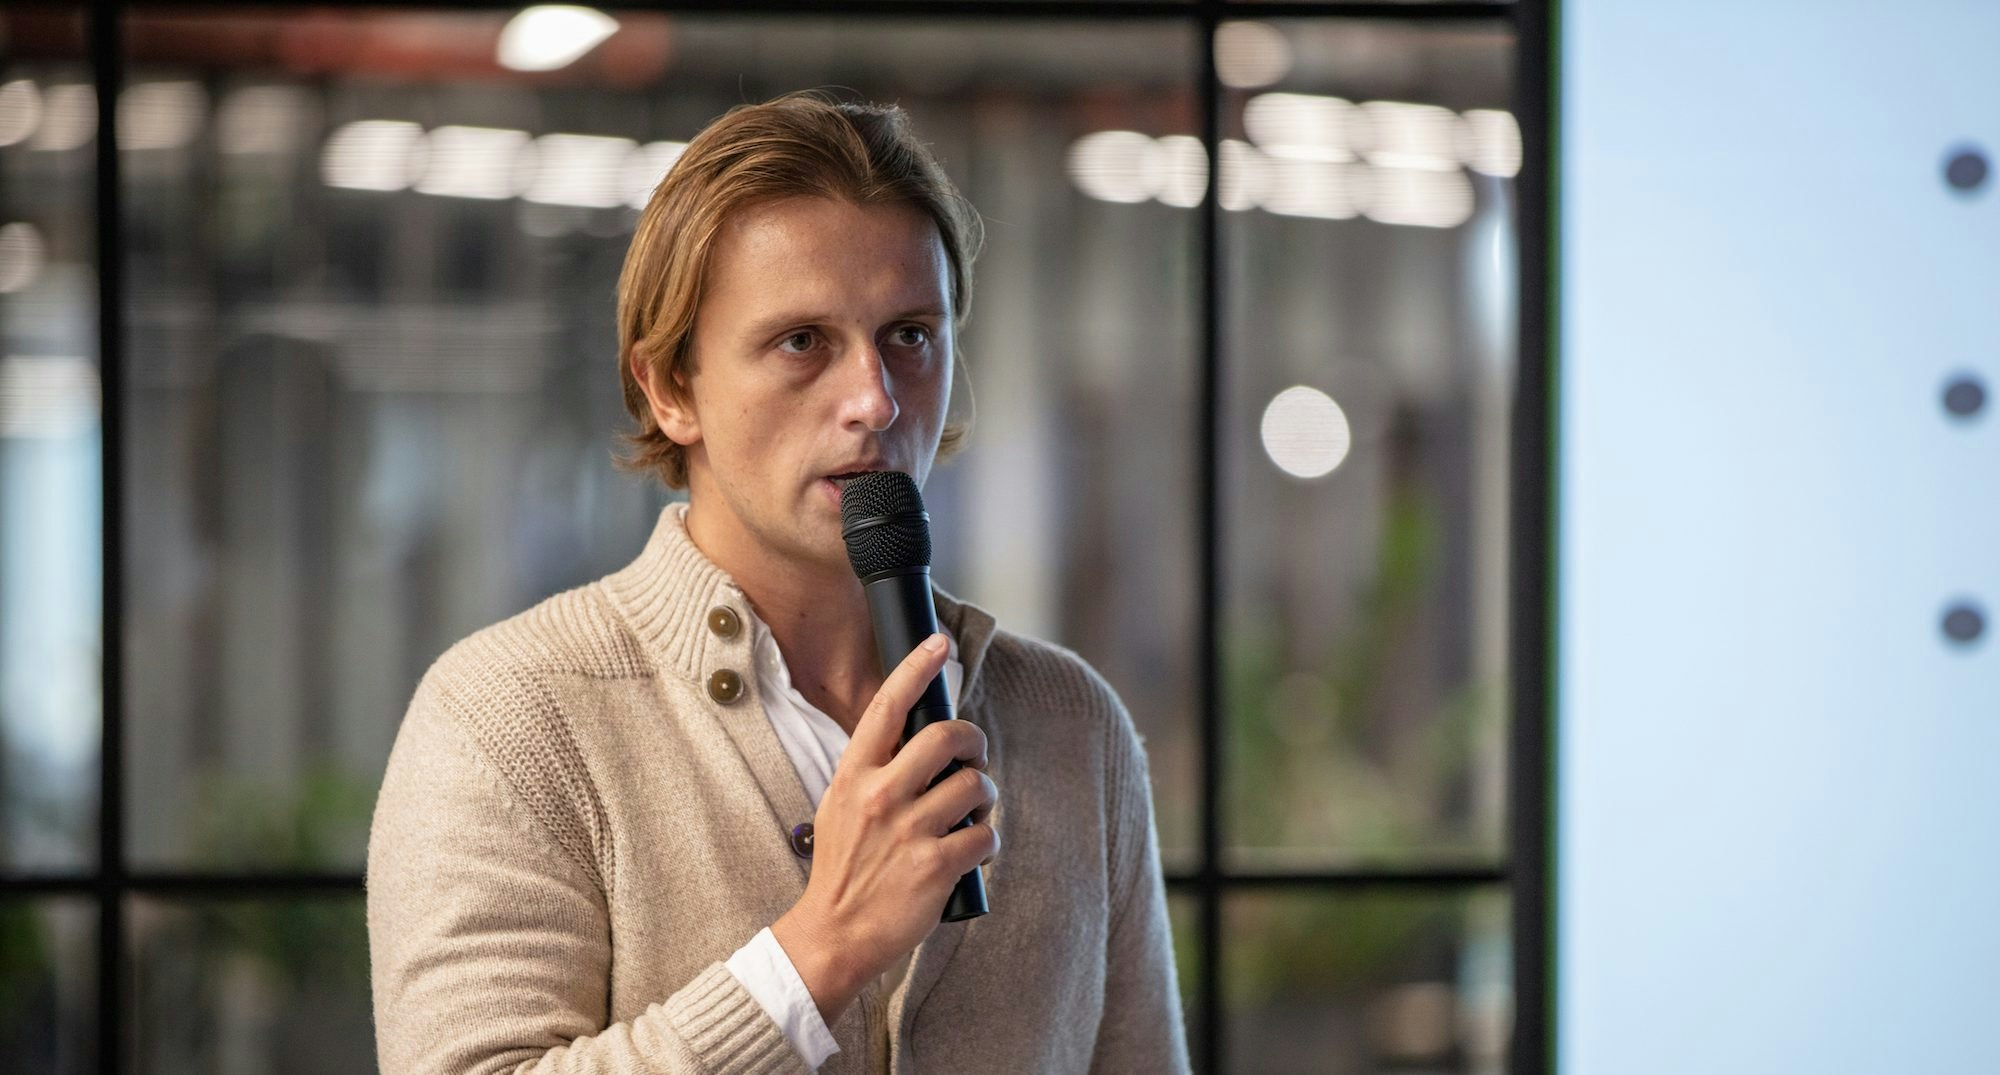 Revolut CEO Nik Storonsky speaking at an event